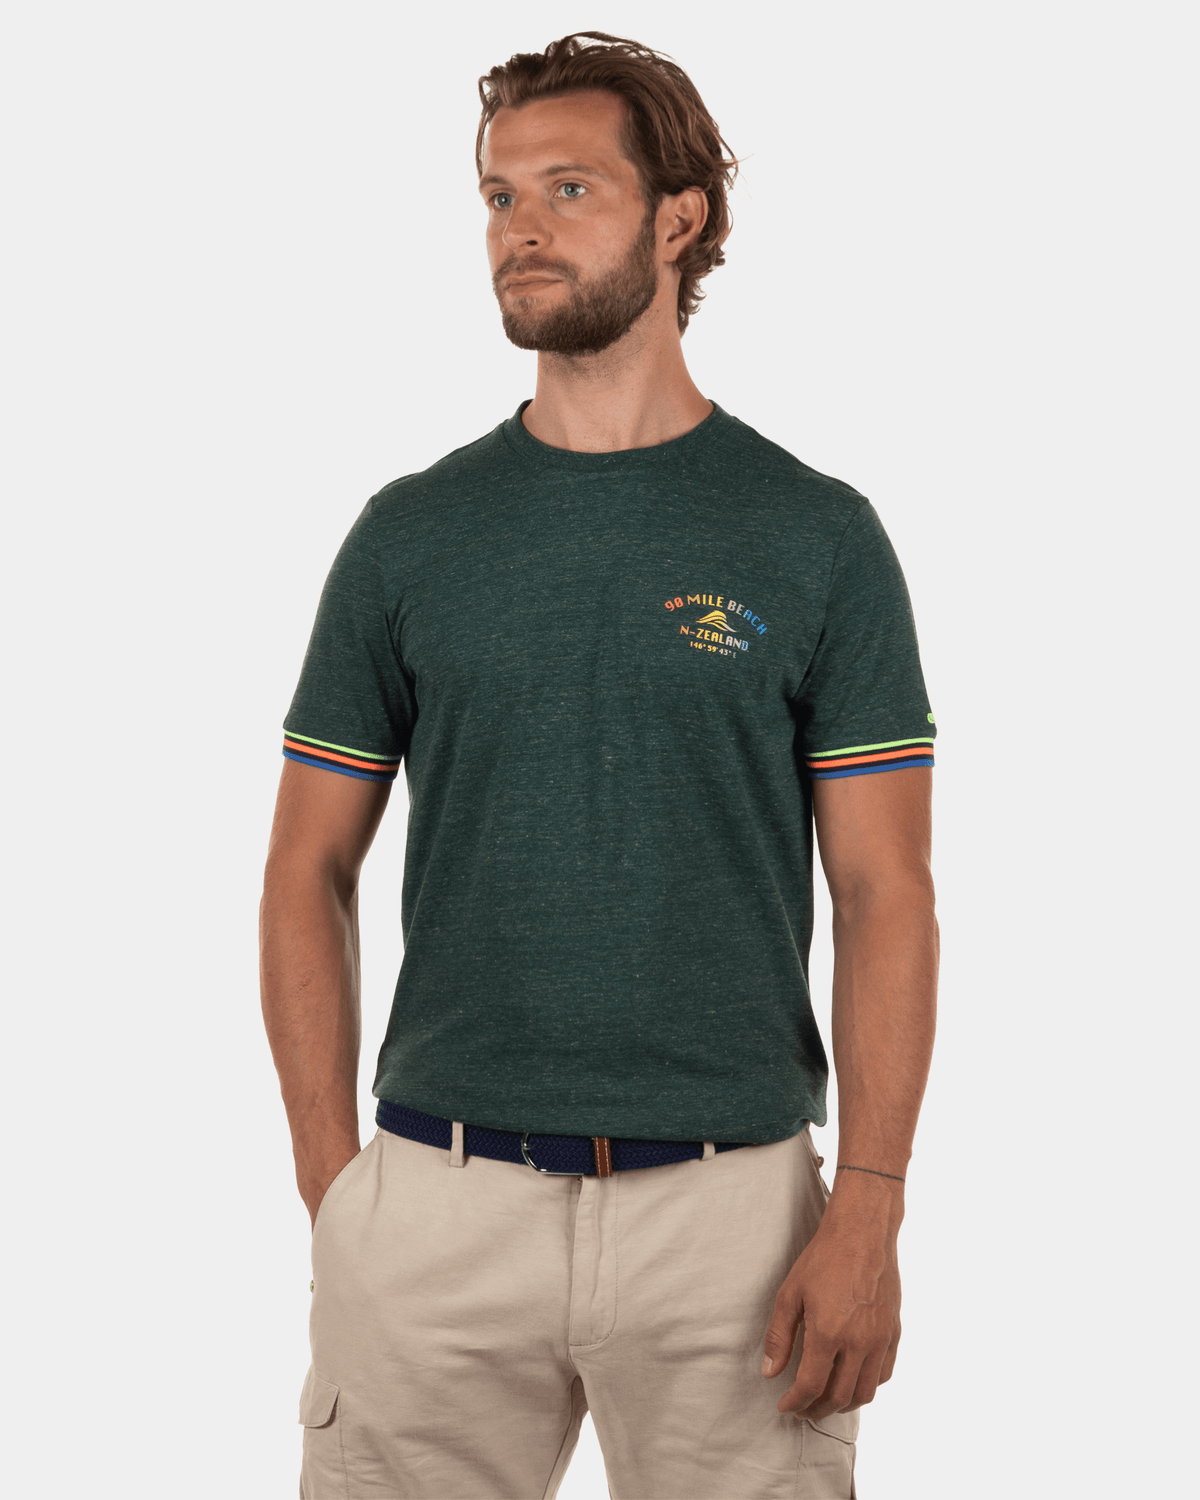 Kohangapiripiri sportief t-shirt - Lead Green